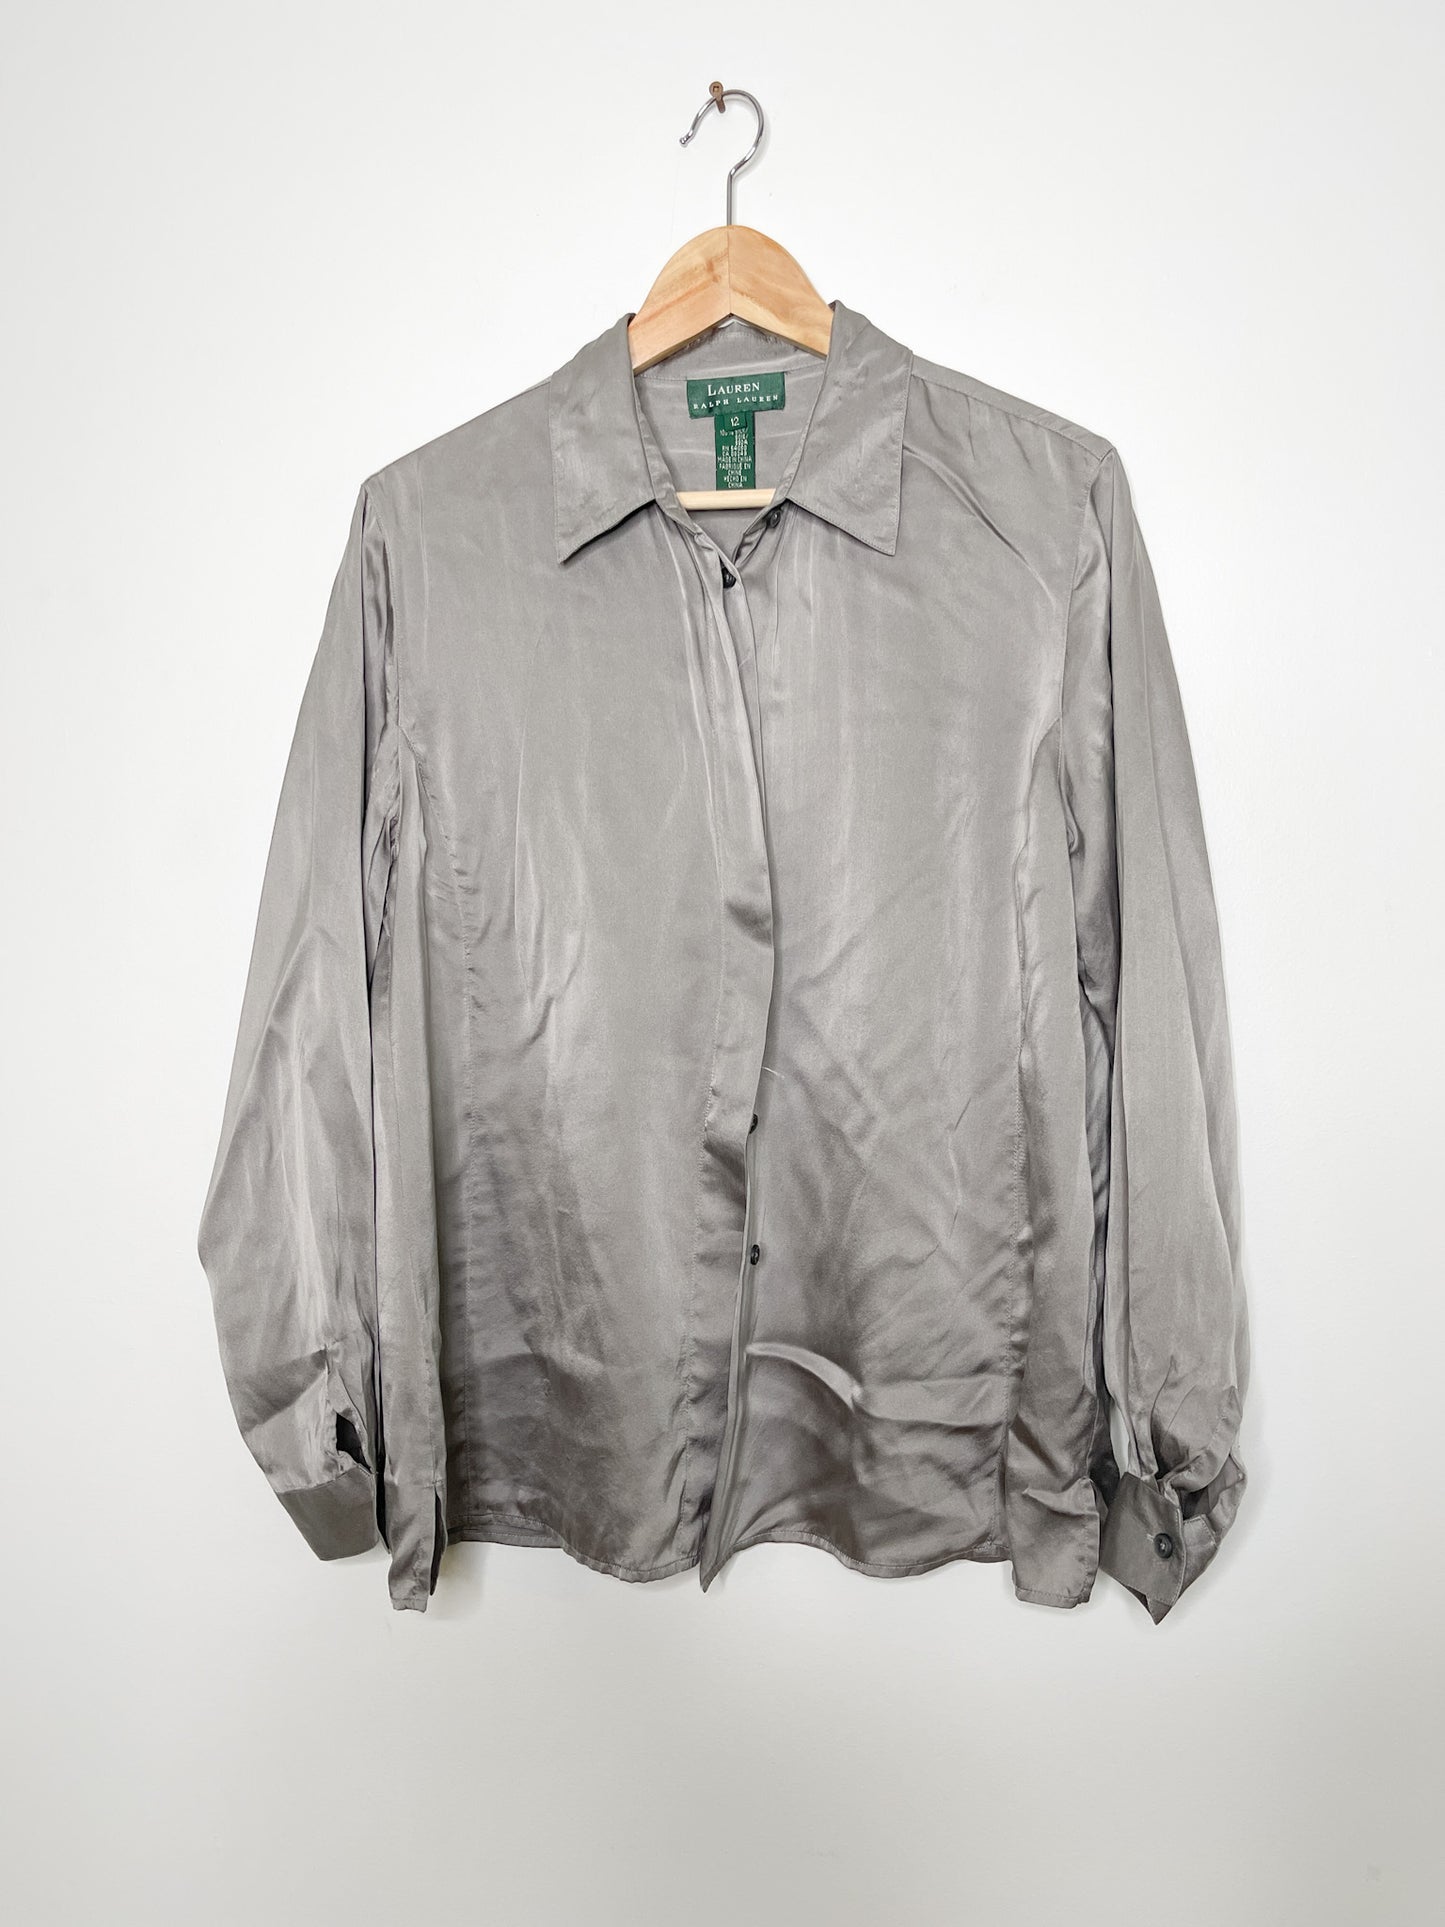 Grey Ralph Lauren Silk Blouse | Vintage Ralph Lauren Blouse | Size 12